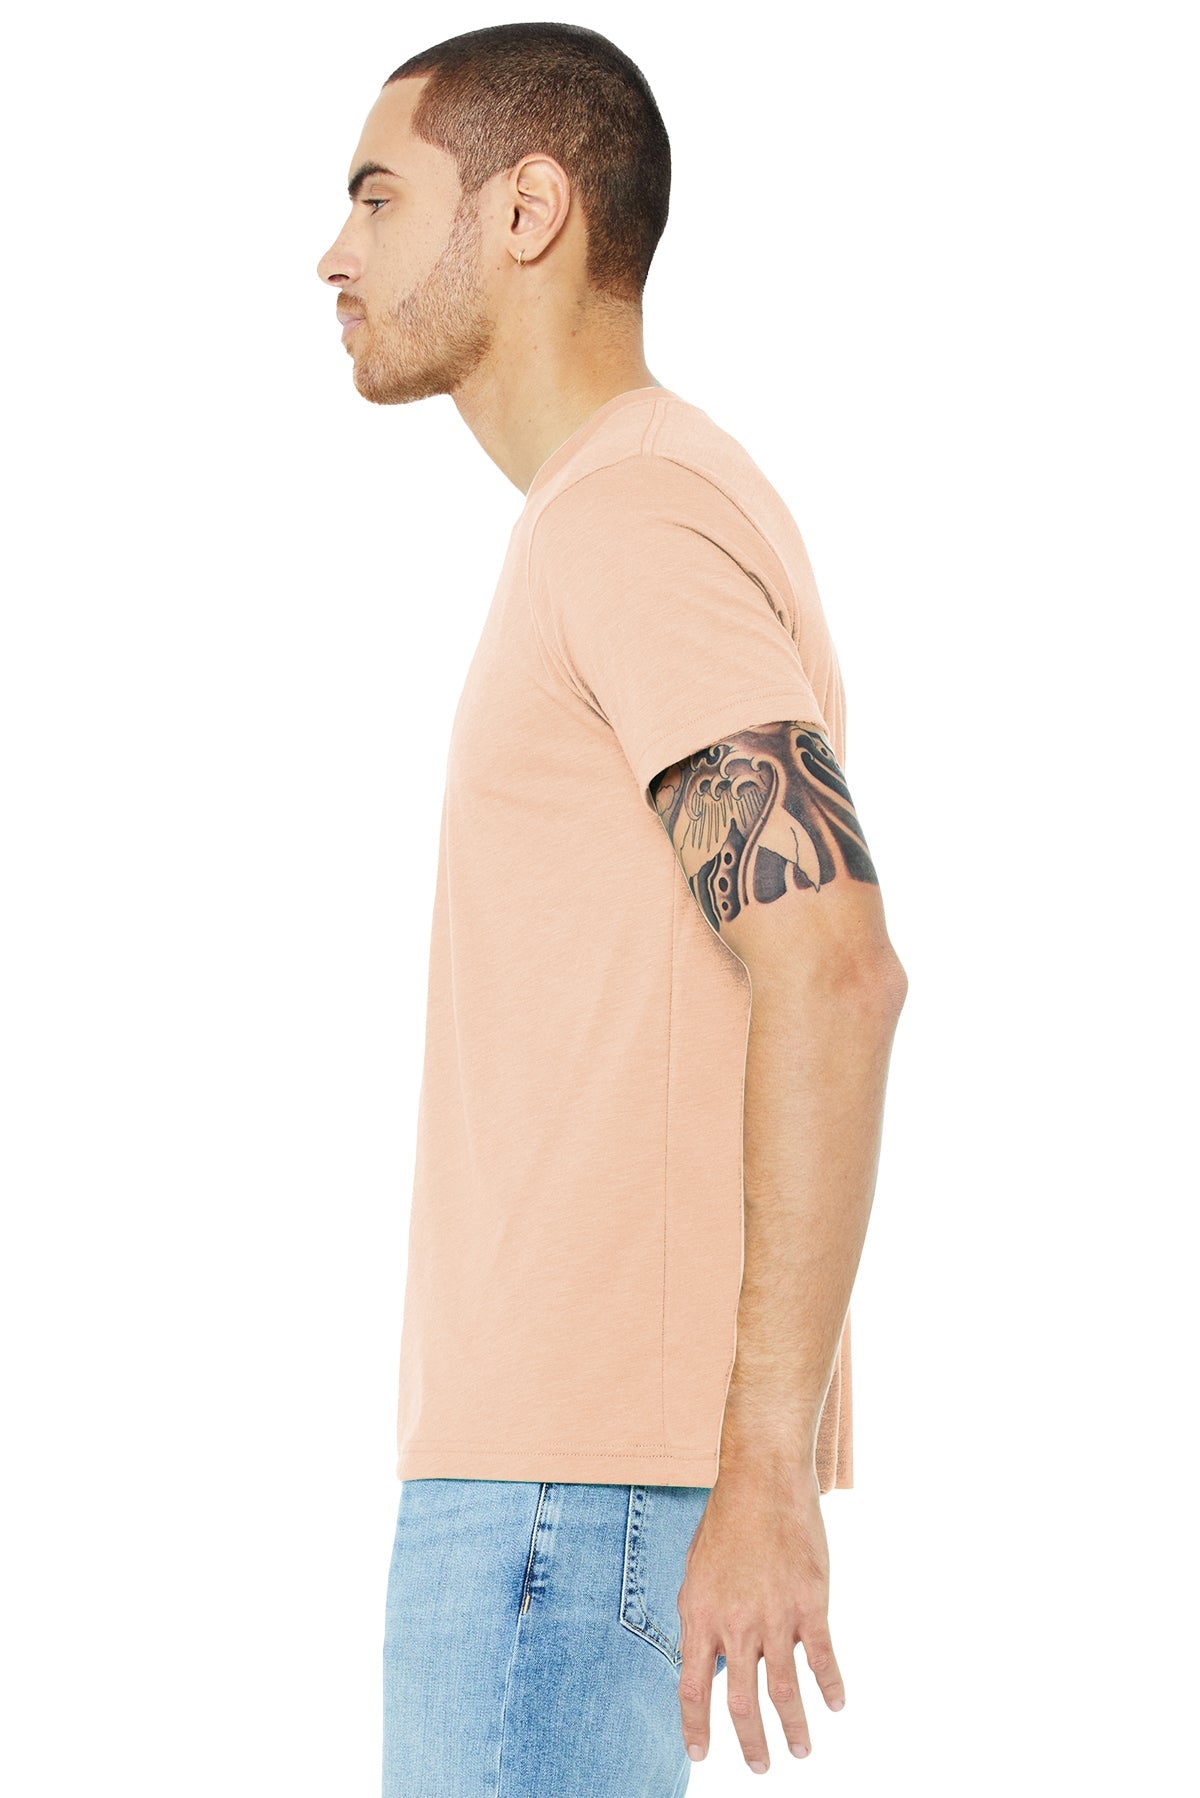 bella + canvas unisex triblend short sleeve t-shirt 3413c peach triblend